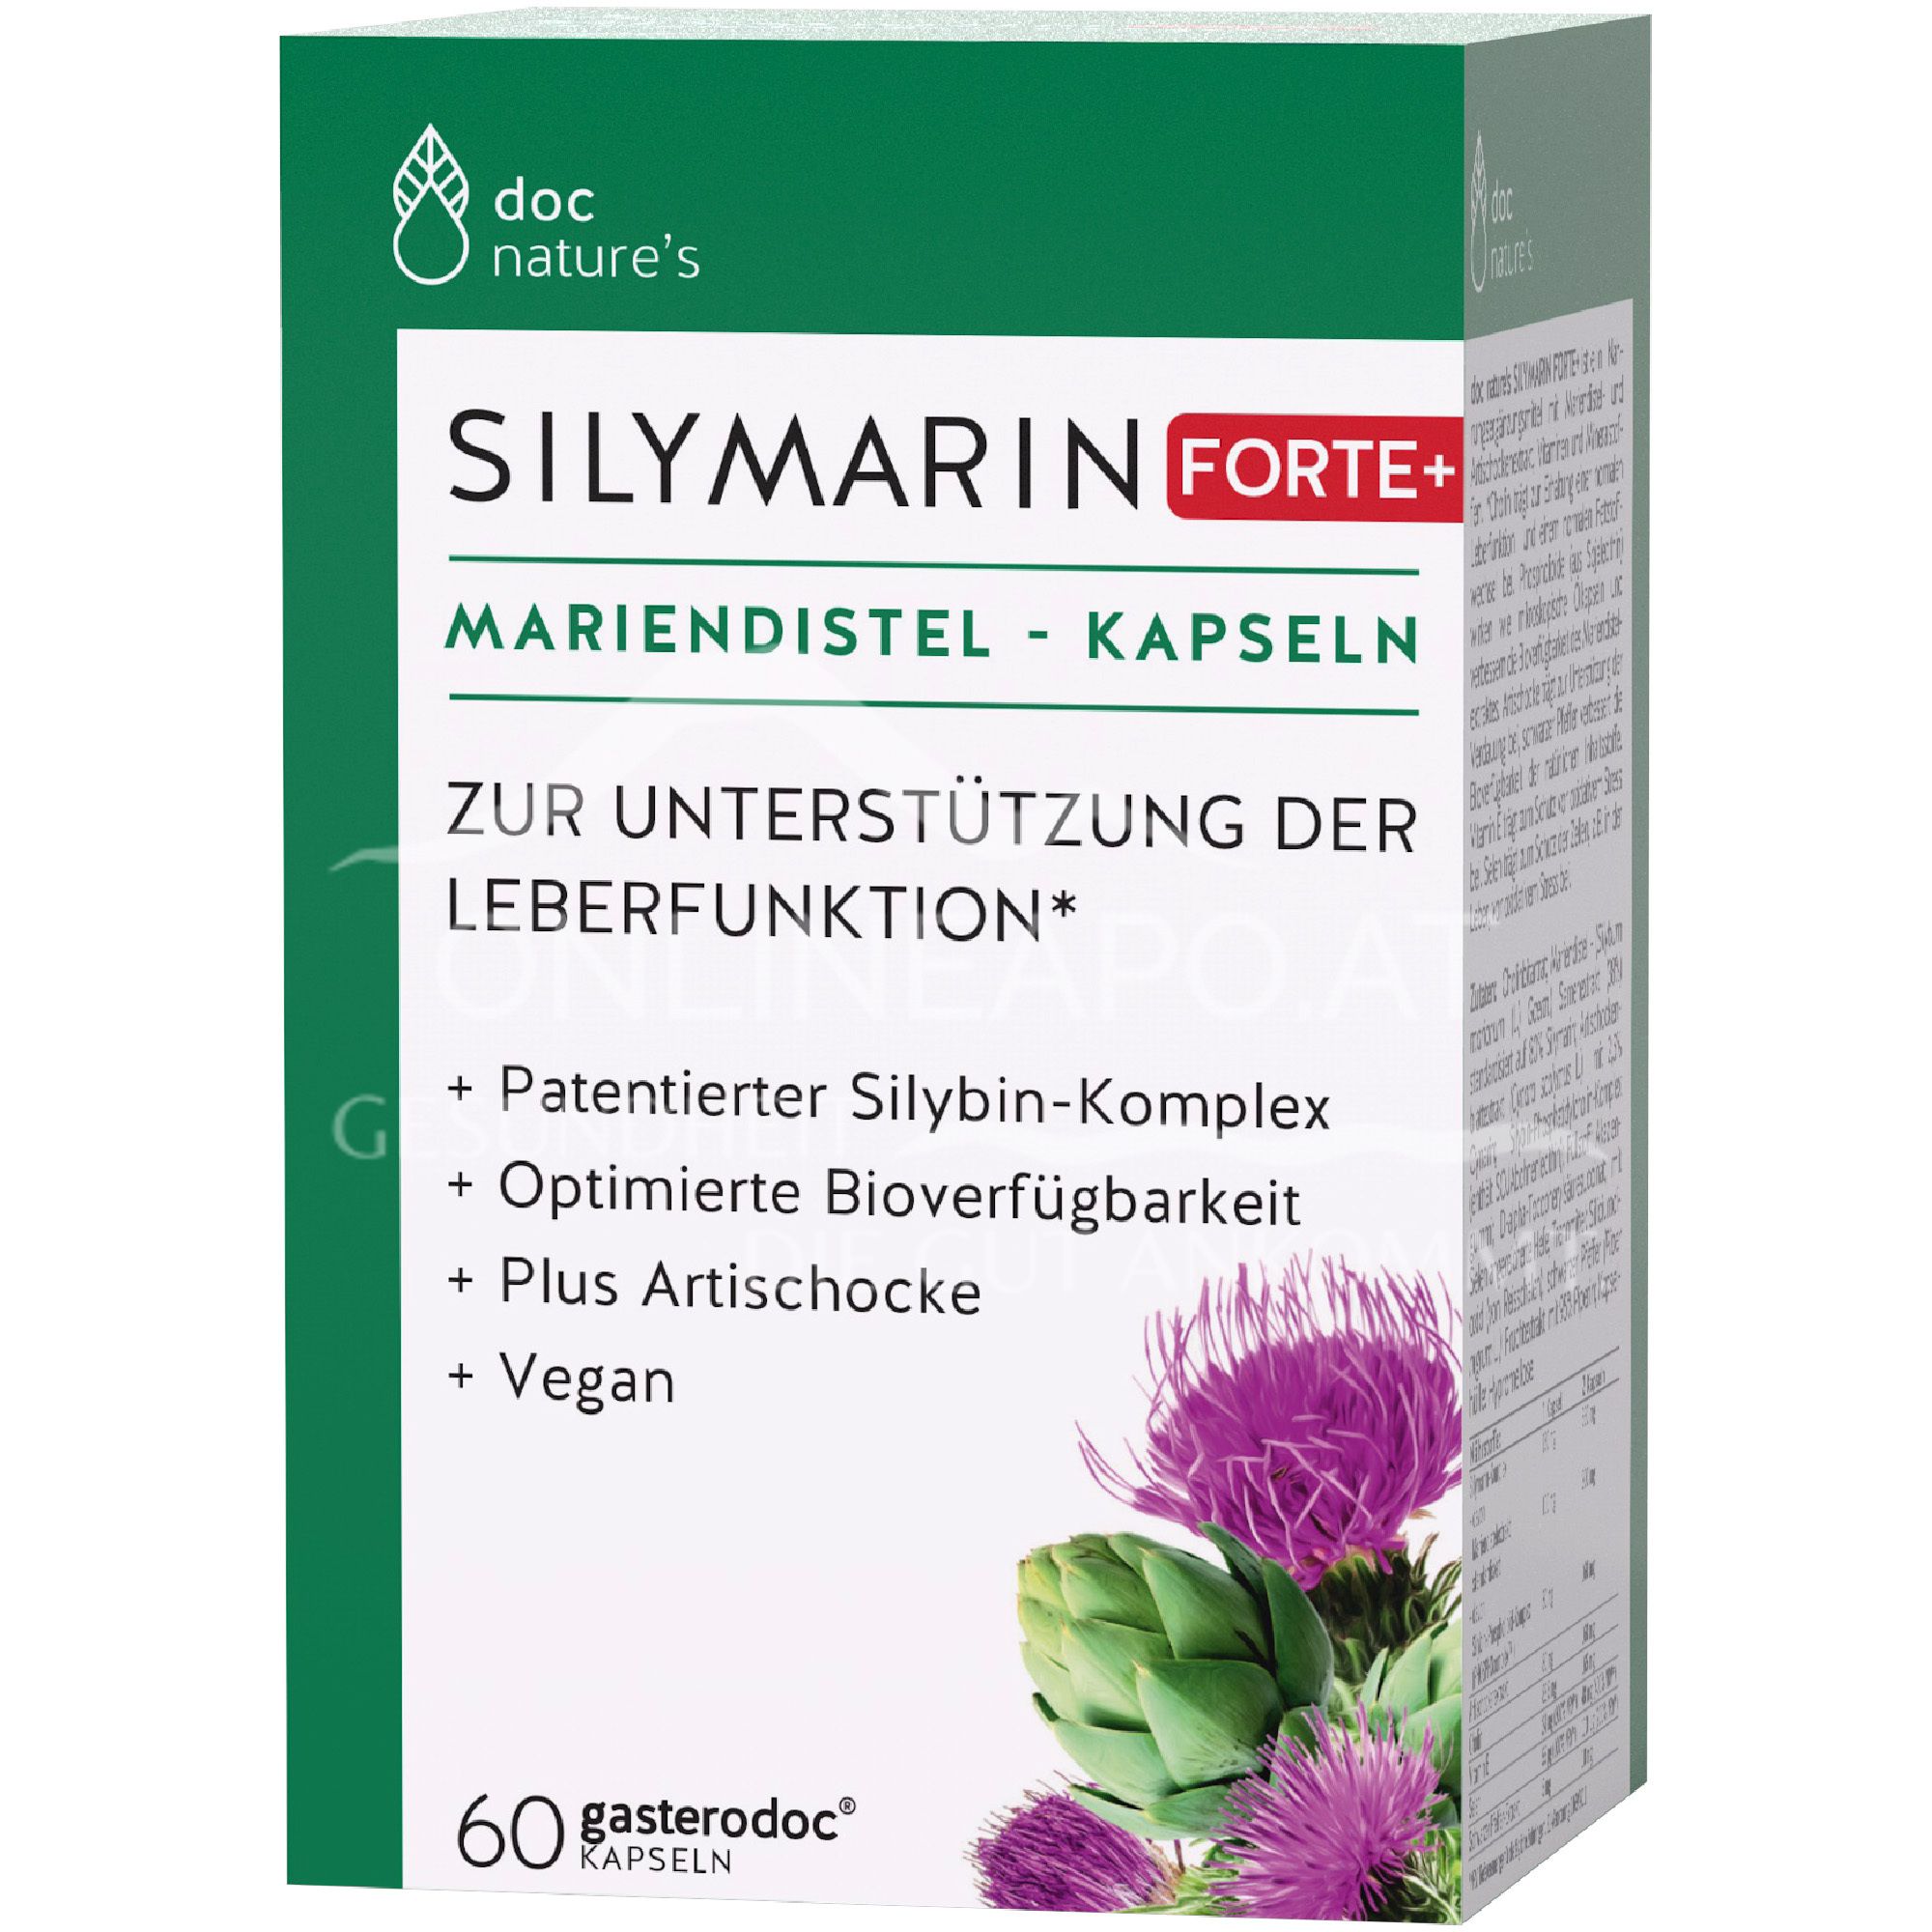 gasterodoc® SILYMARIN FORTE+ Mariendistel-Kapseln